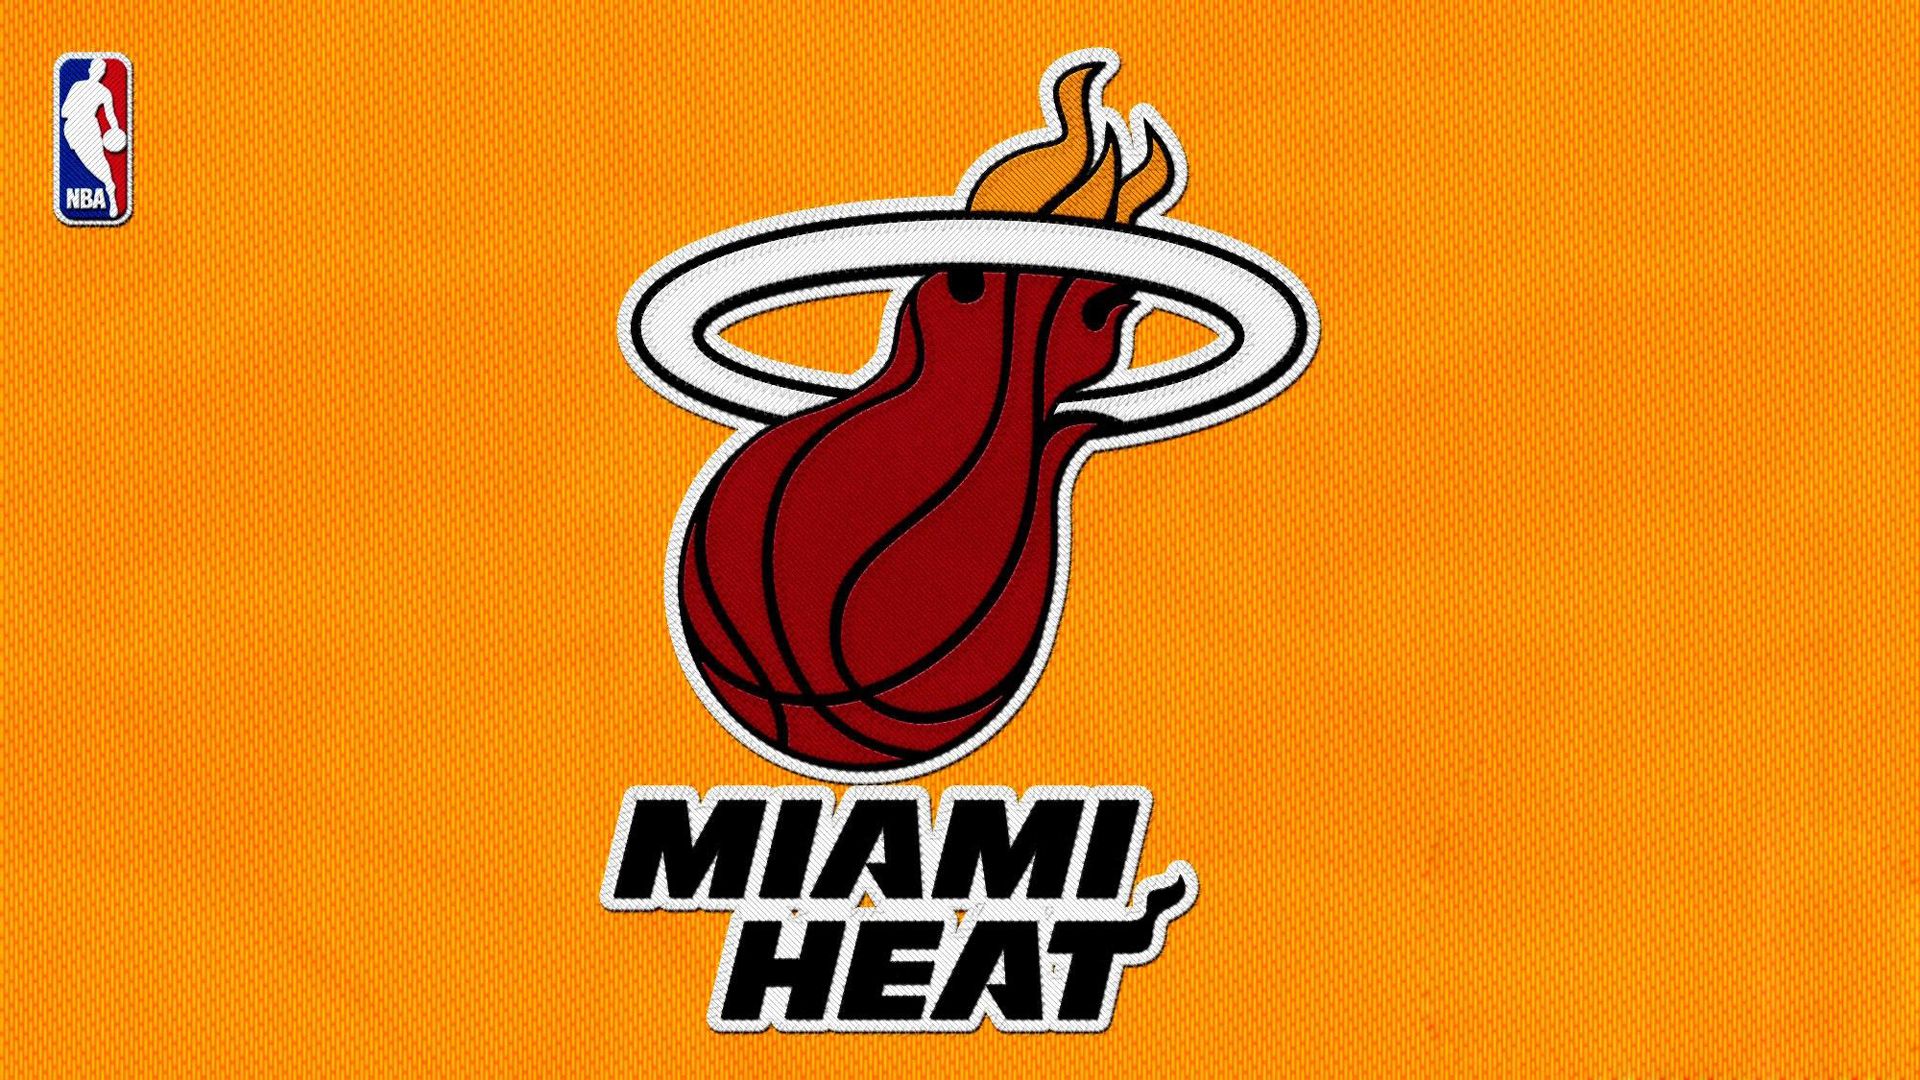 Miami Heat Wallpaper Image Photo Picture Background